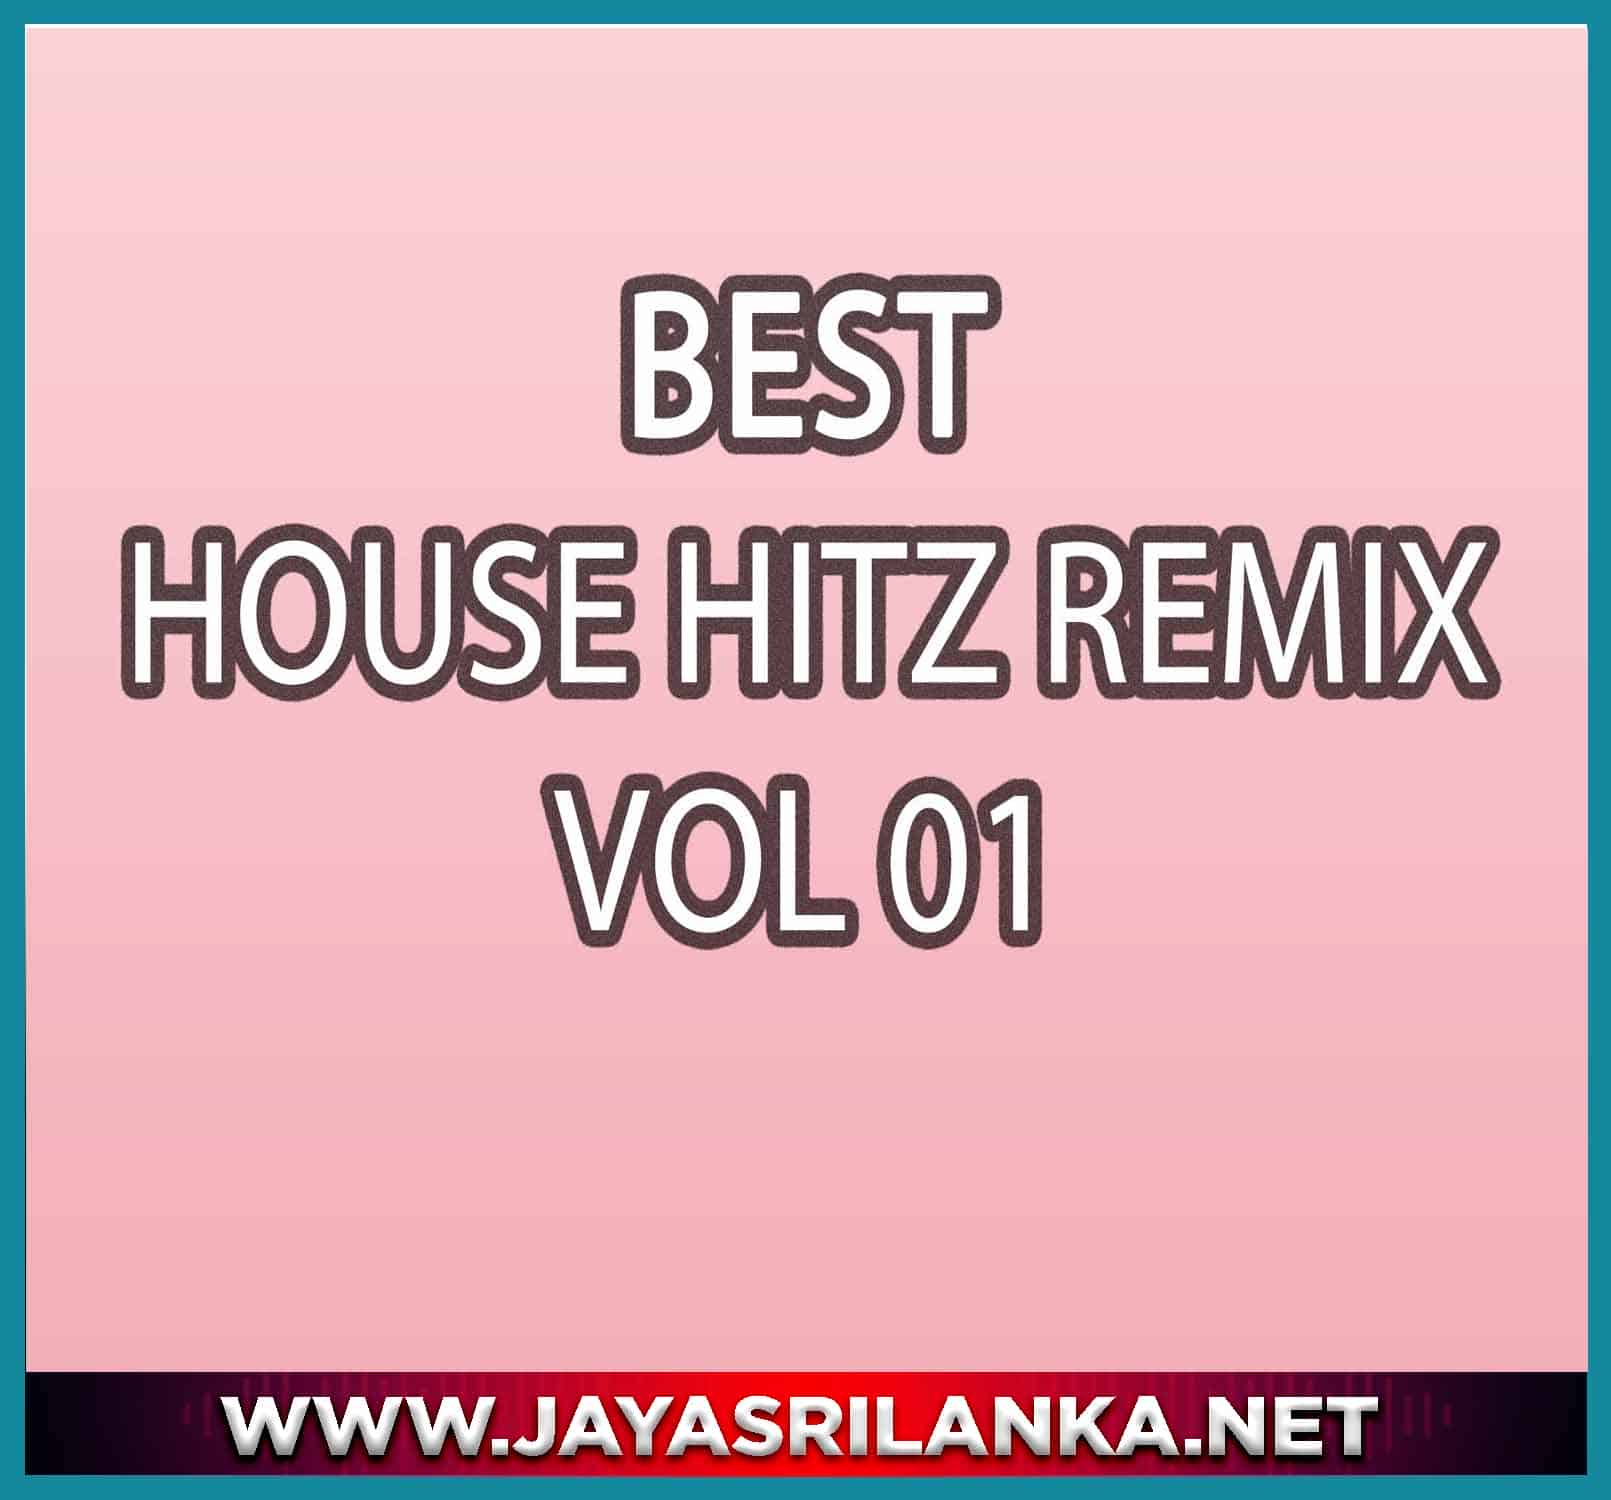 16 - Hip Hop Hooray Remix - Best House Hitz Vol 01 mp3 Image